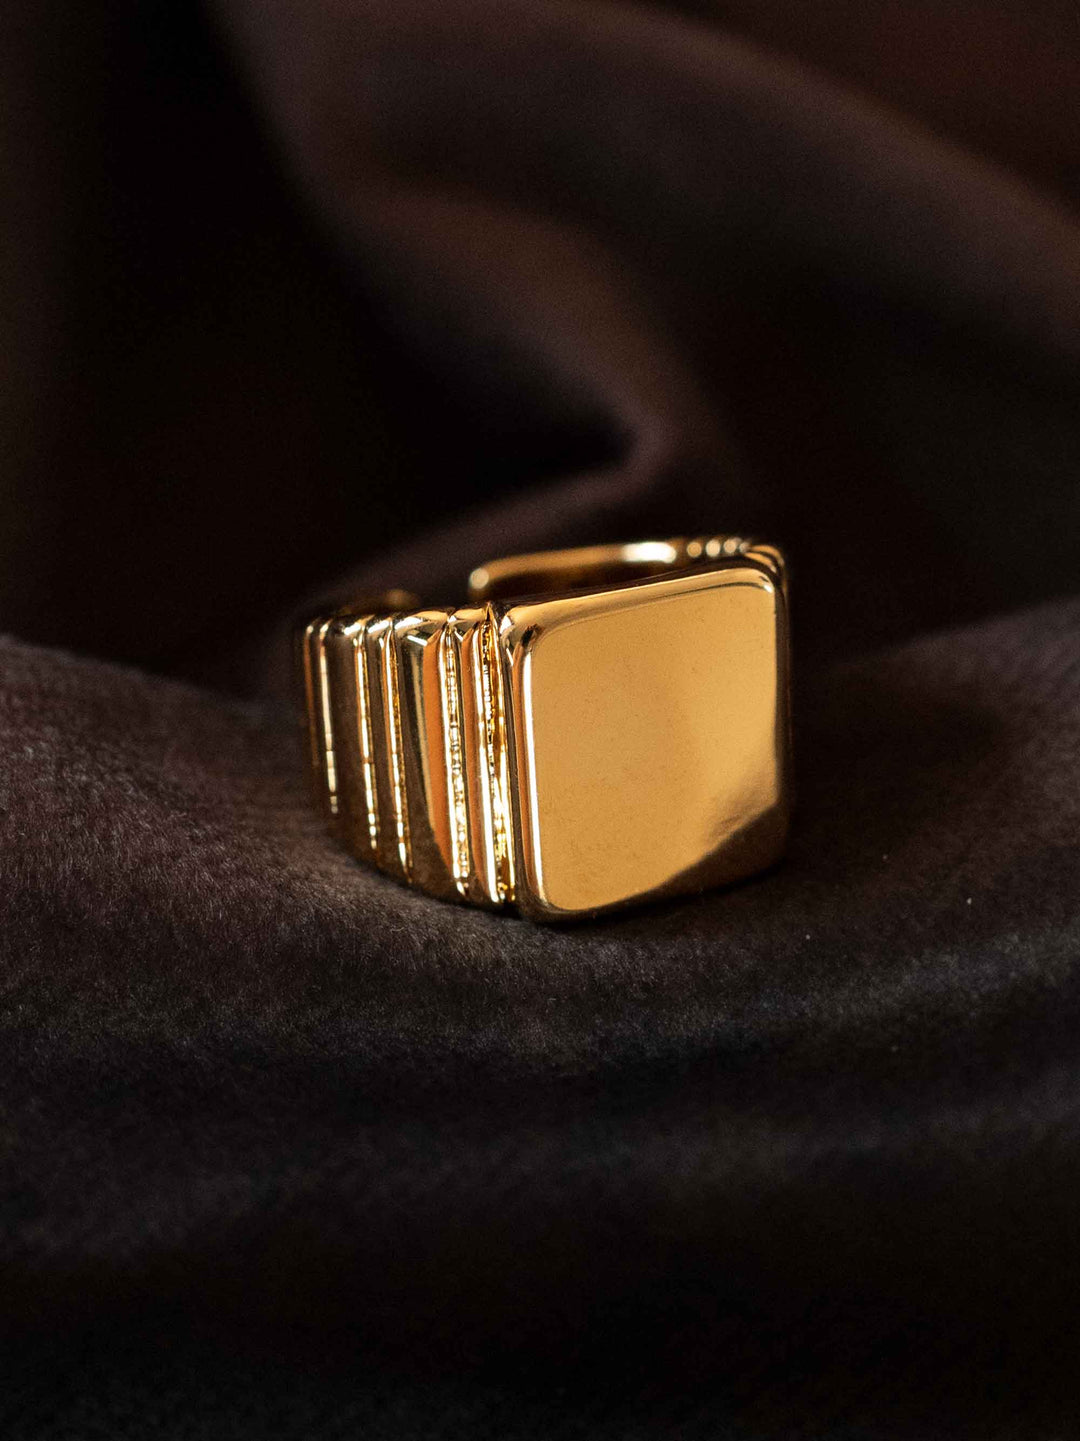 A gold geometric square ring